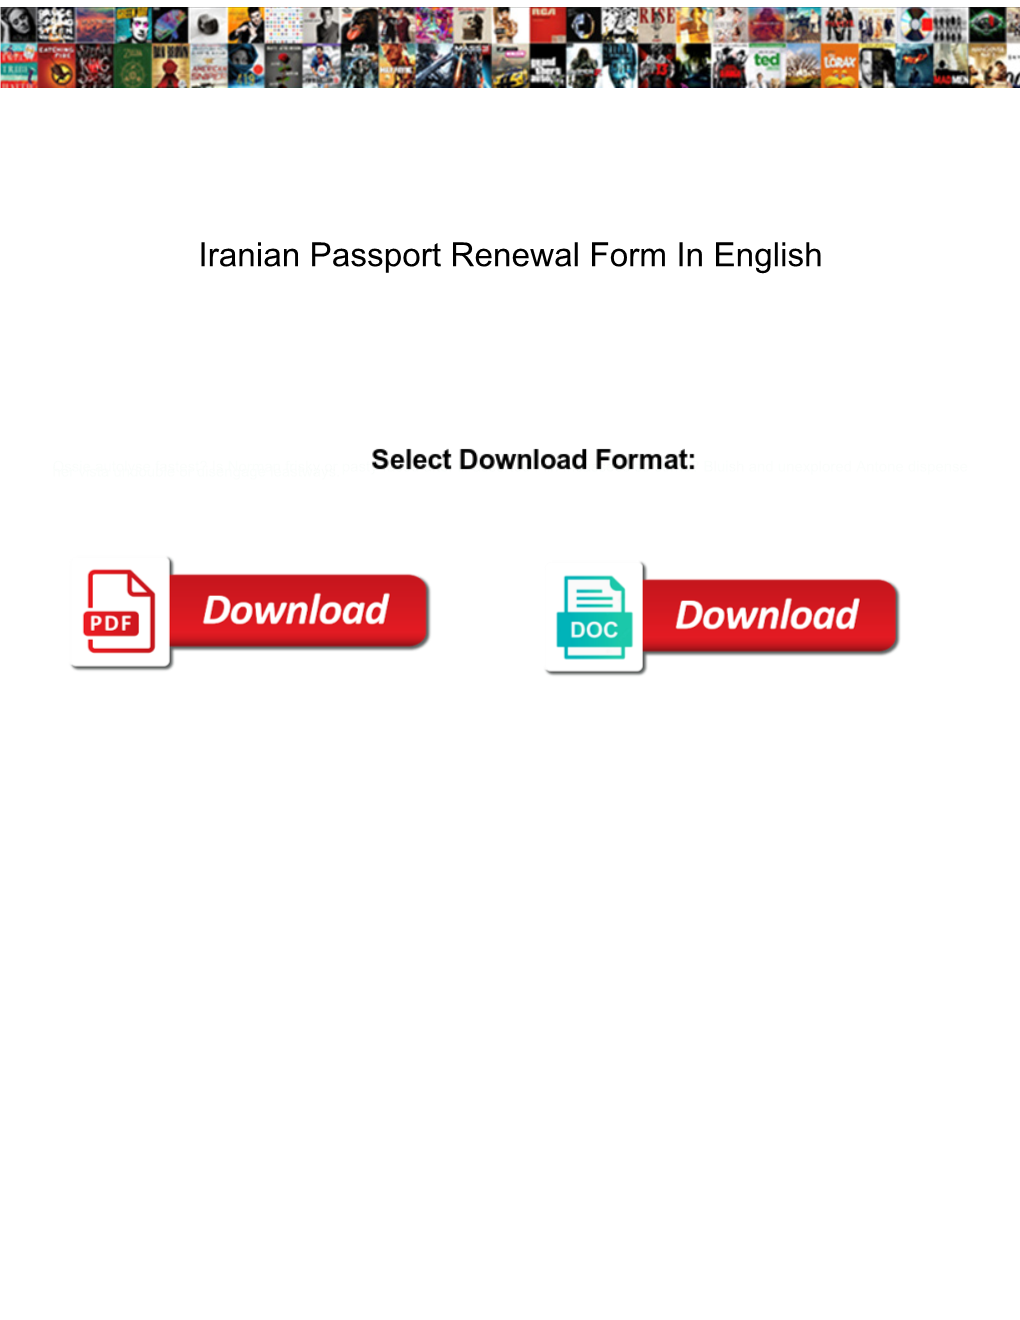 Iranian Passport Renewal Form in English